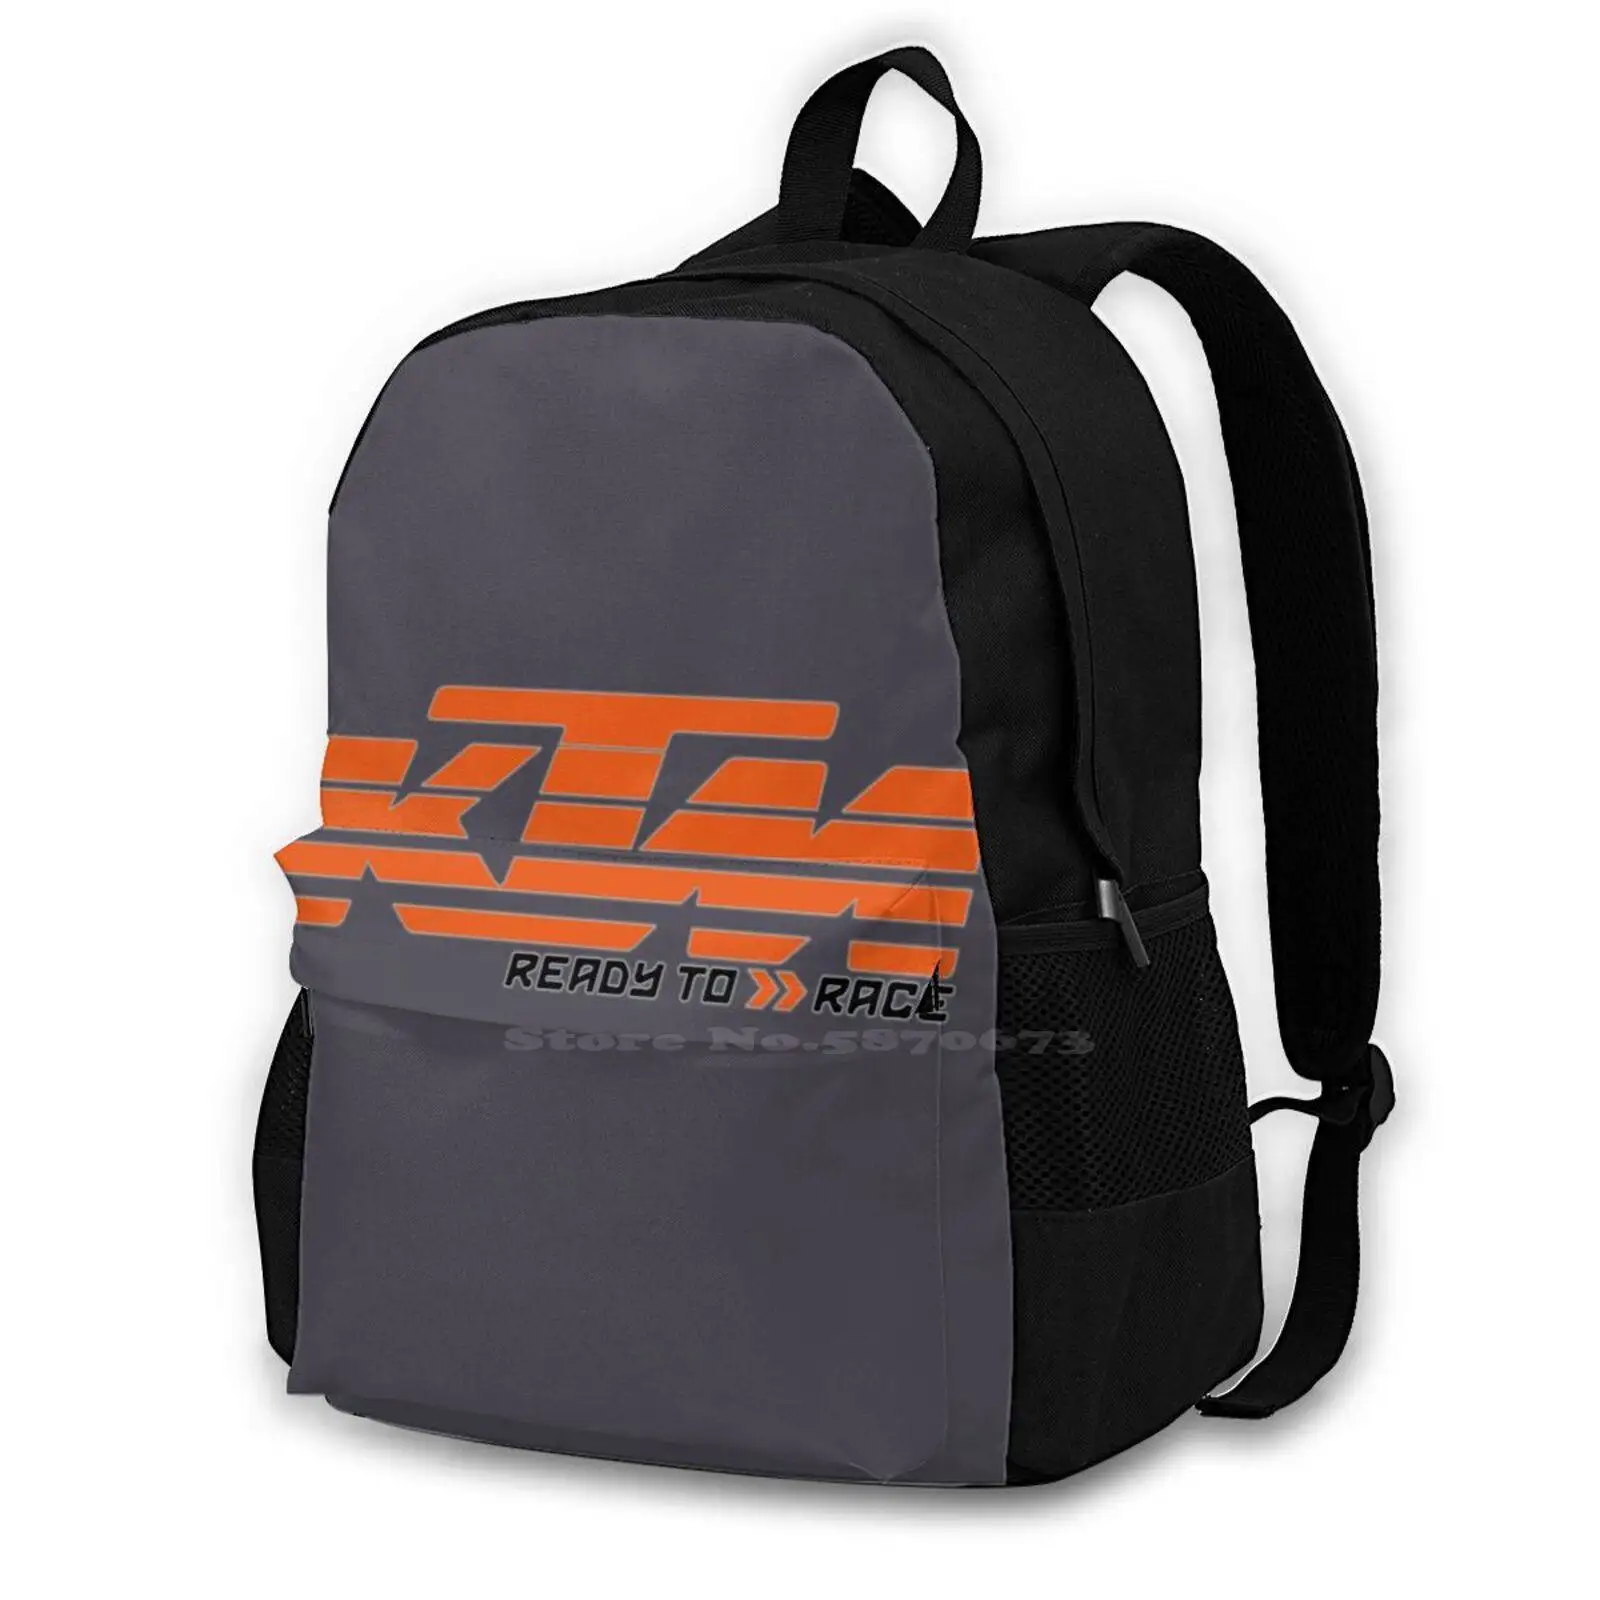 

Best Racing Company Bag Backpack For Men Women Girls Teenage Black Ready To Race Ag Sport Motorcycle Racing Factory Racing